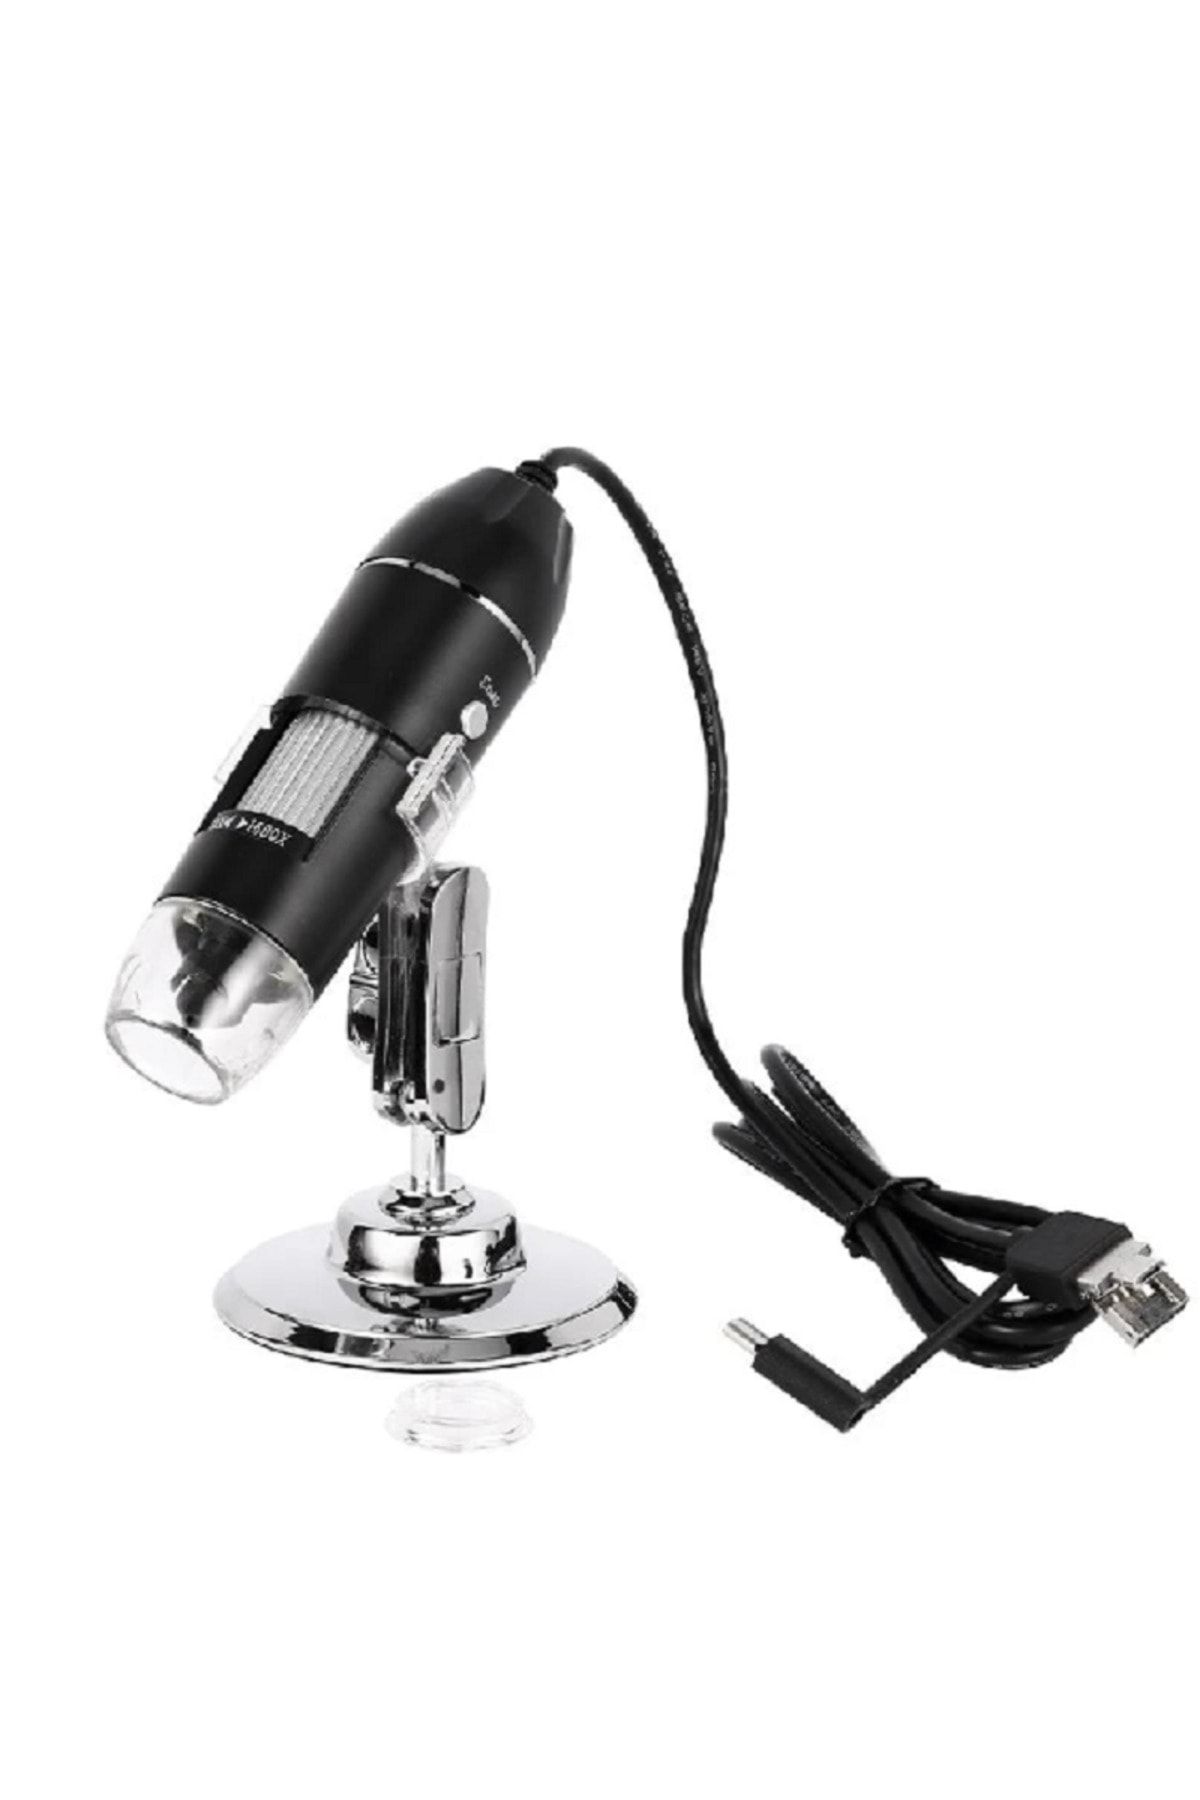 Genel Markalar 1600X Zoom 2MP USB Dijital Mikroskop Endoskop Kamera